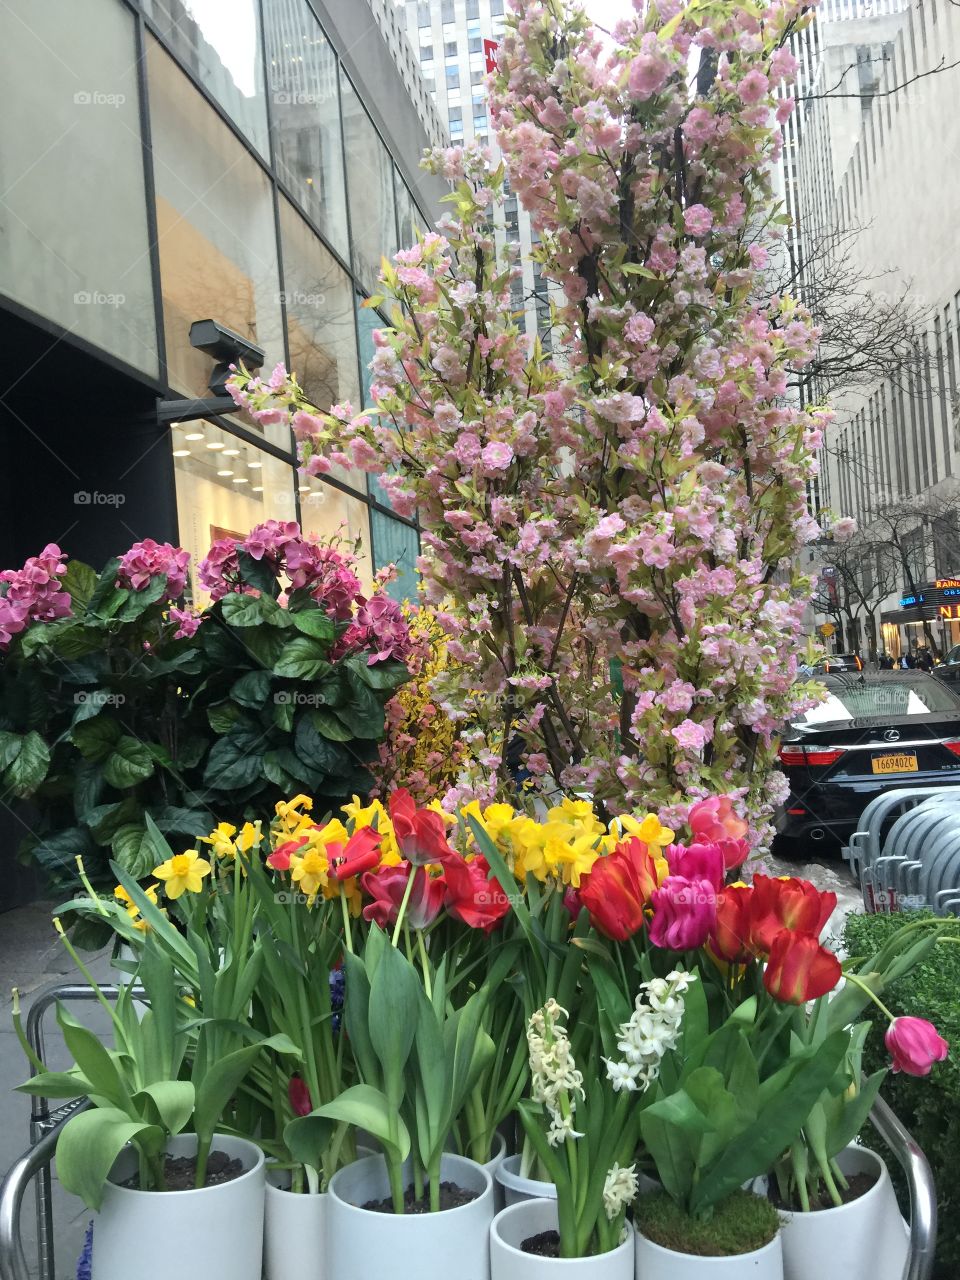 New York flowers bloom spring 